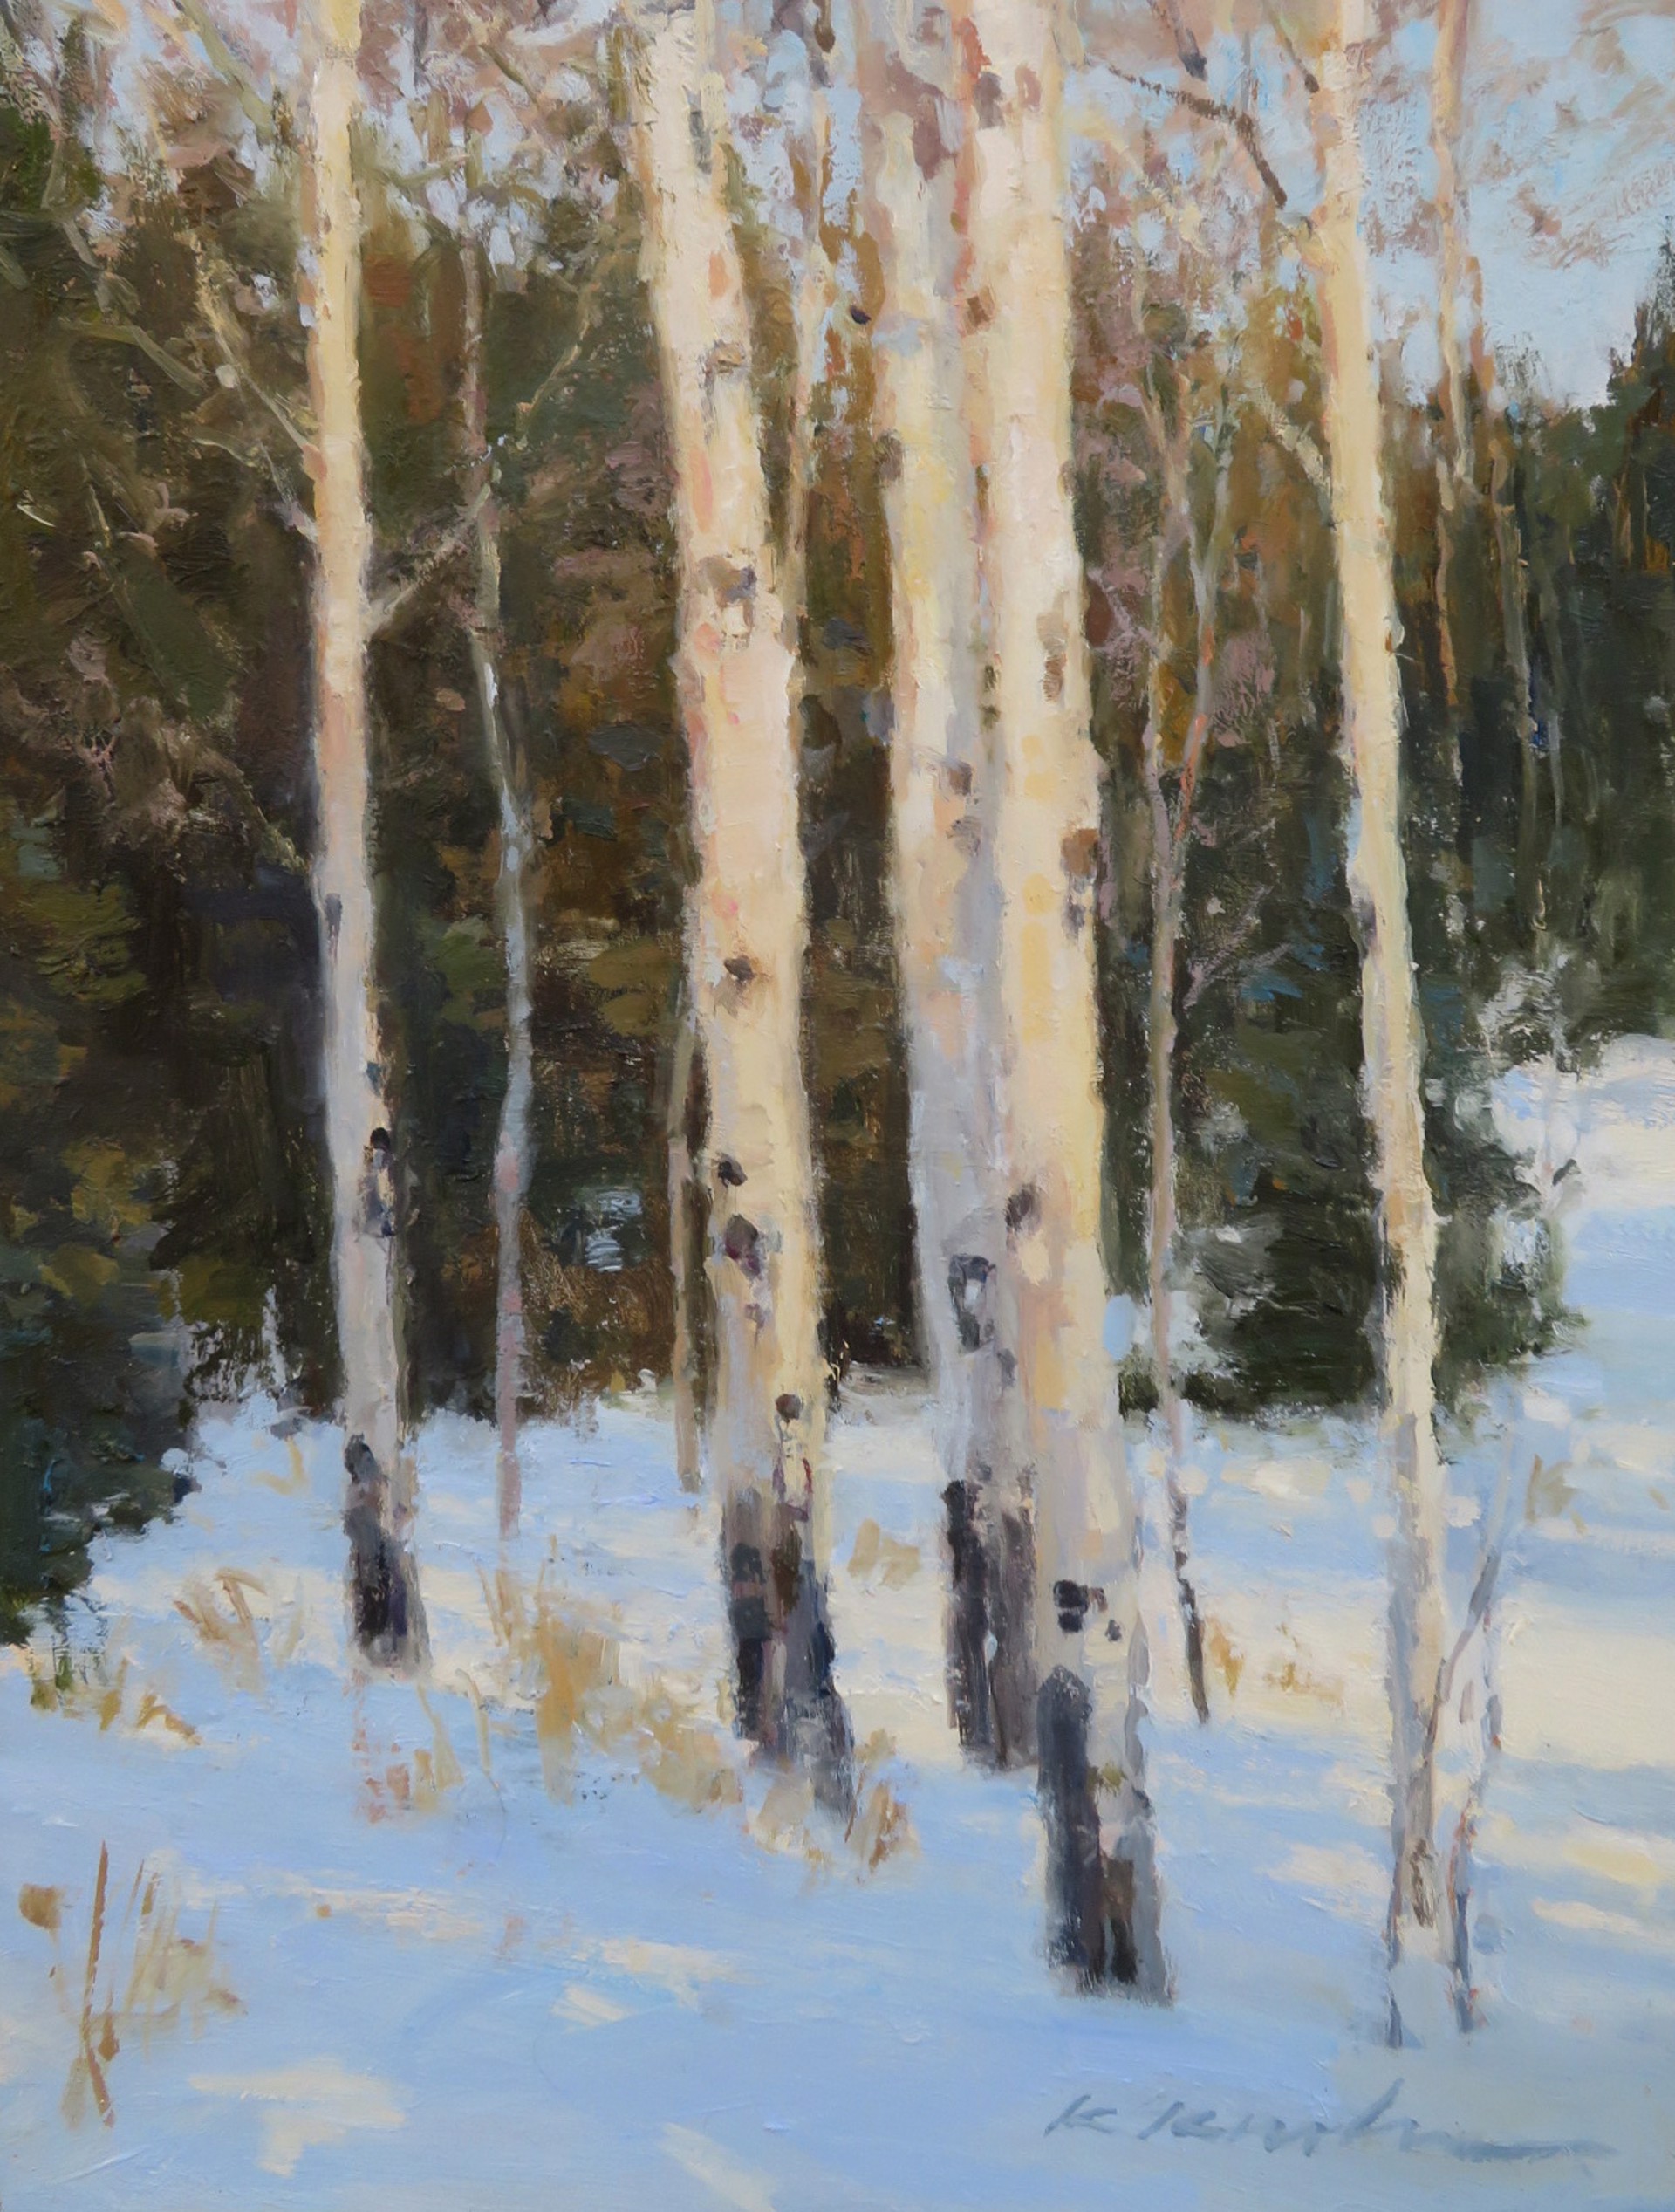 Aspen Impression-Winter by Kate Kiesler